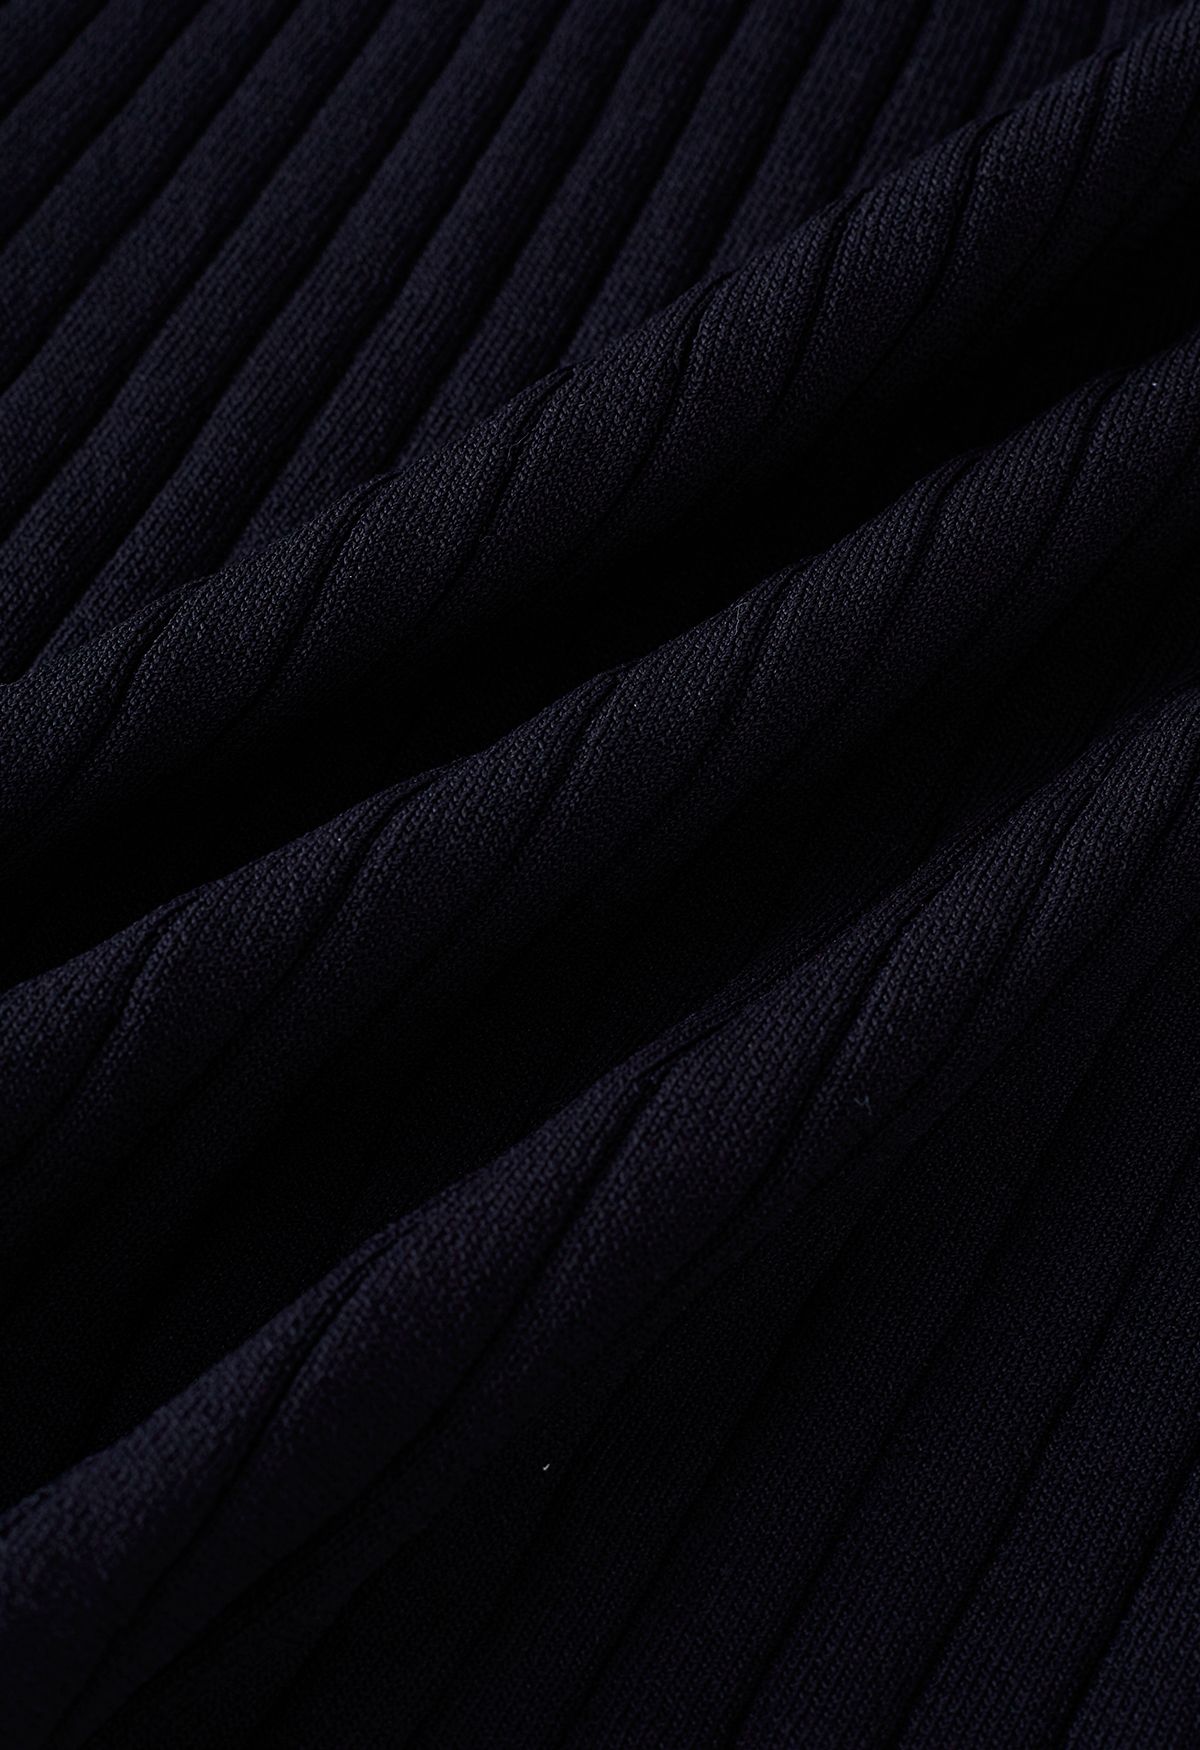 V-Neck Short Sleeve Ribbed Knit Dress in Black